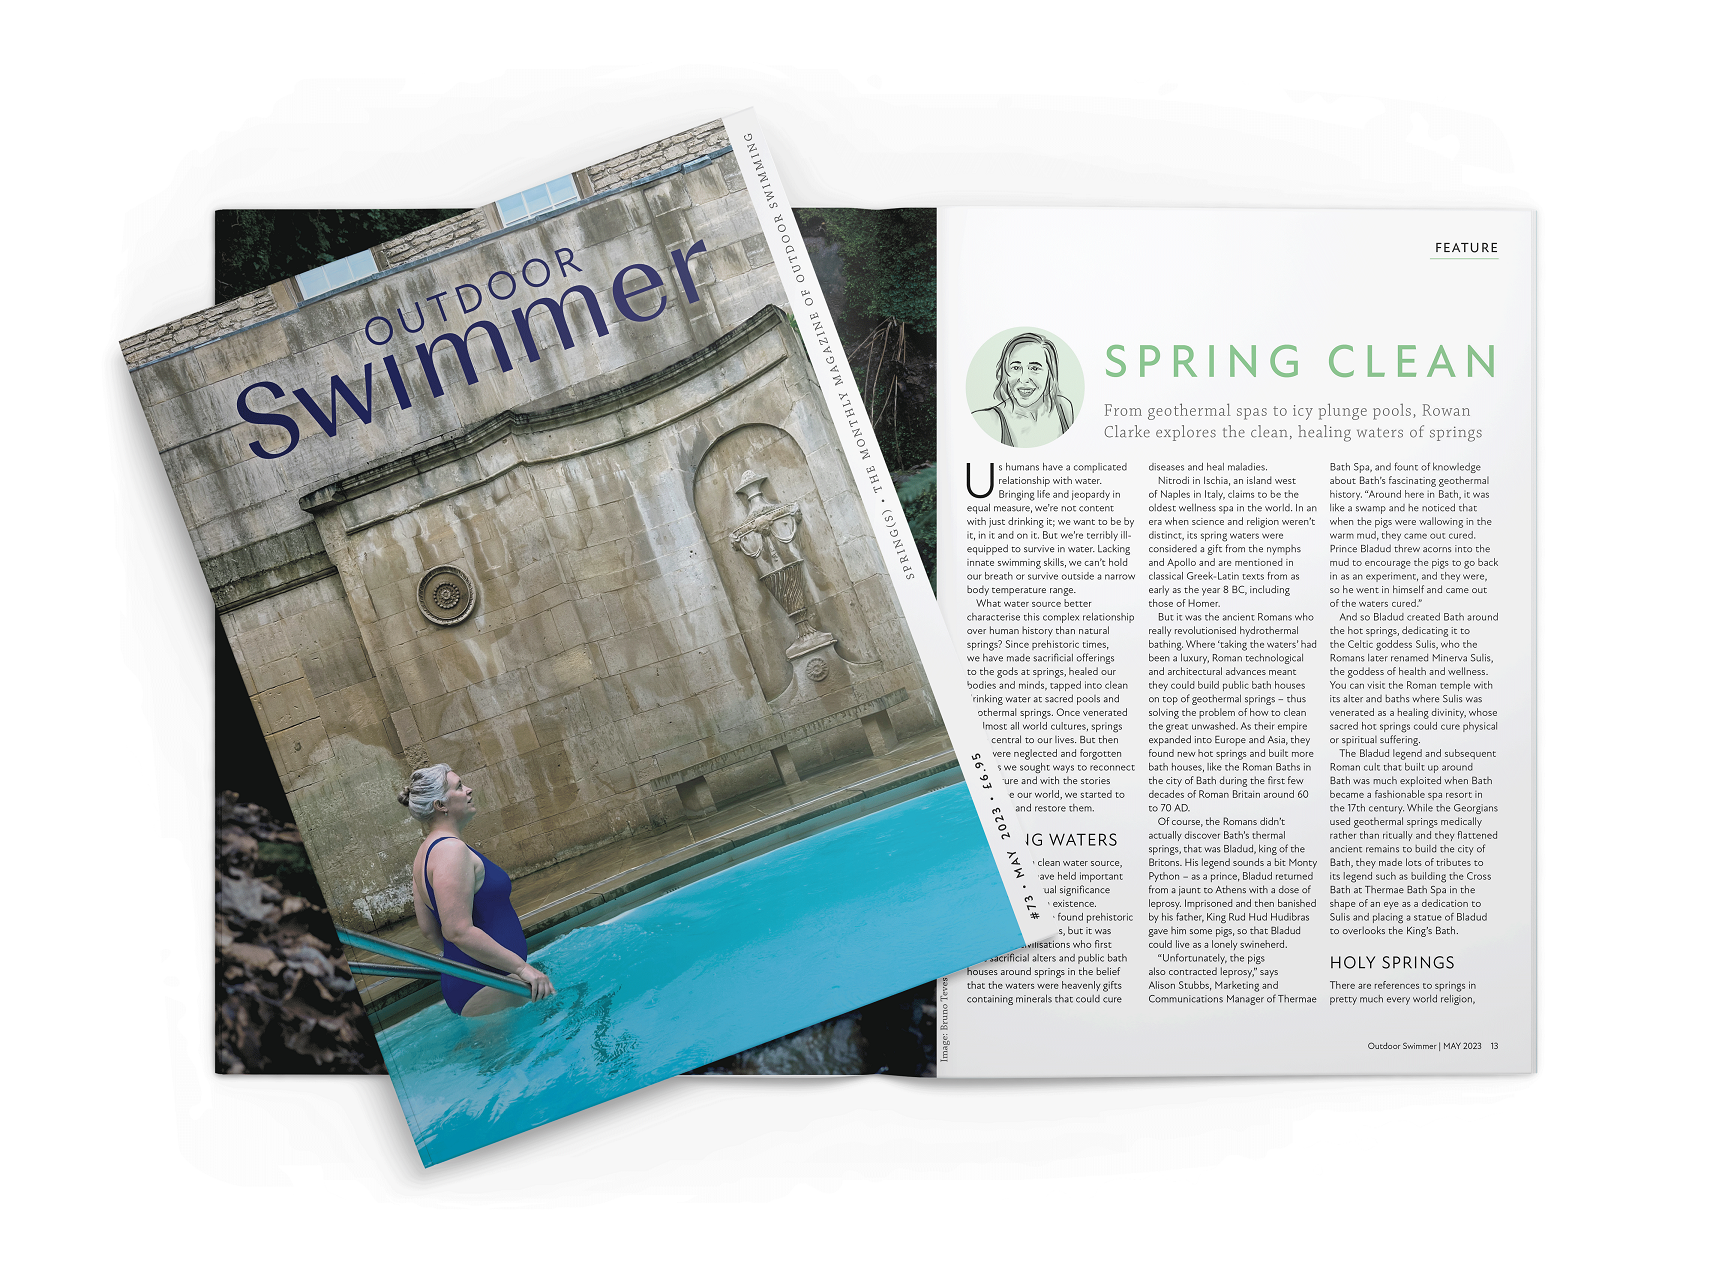 Outdoor Swimmer Magazine – SPRING(S)